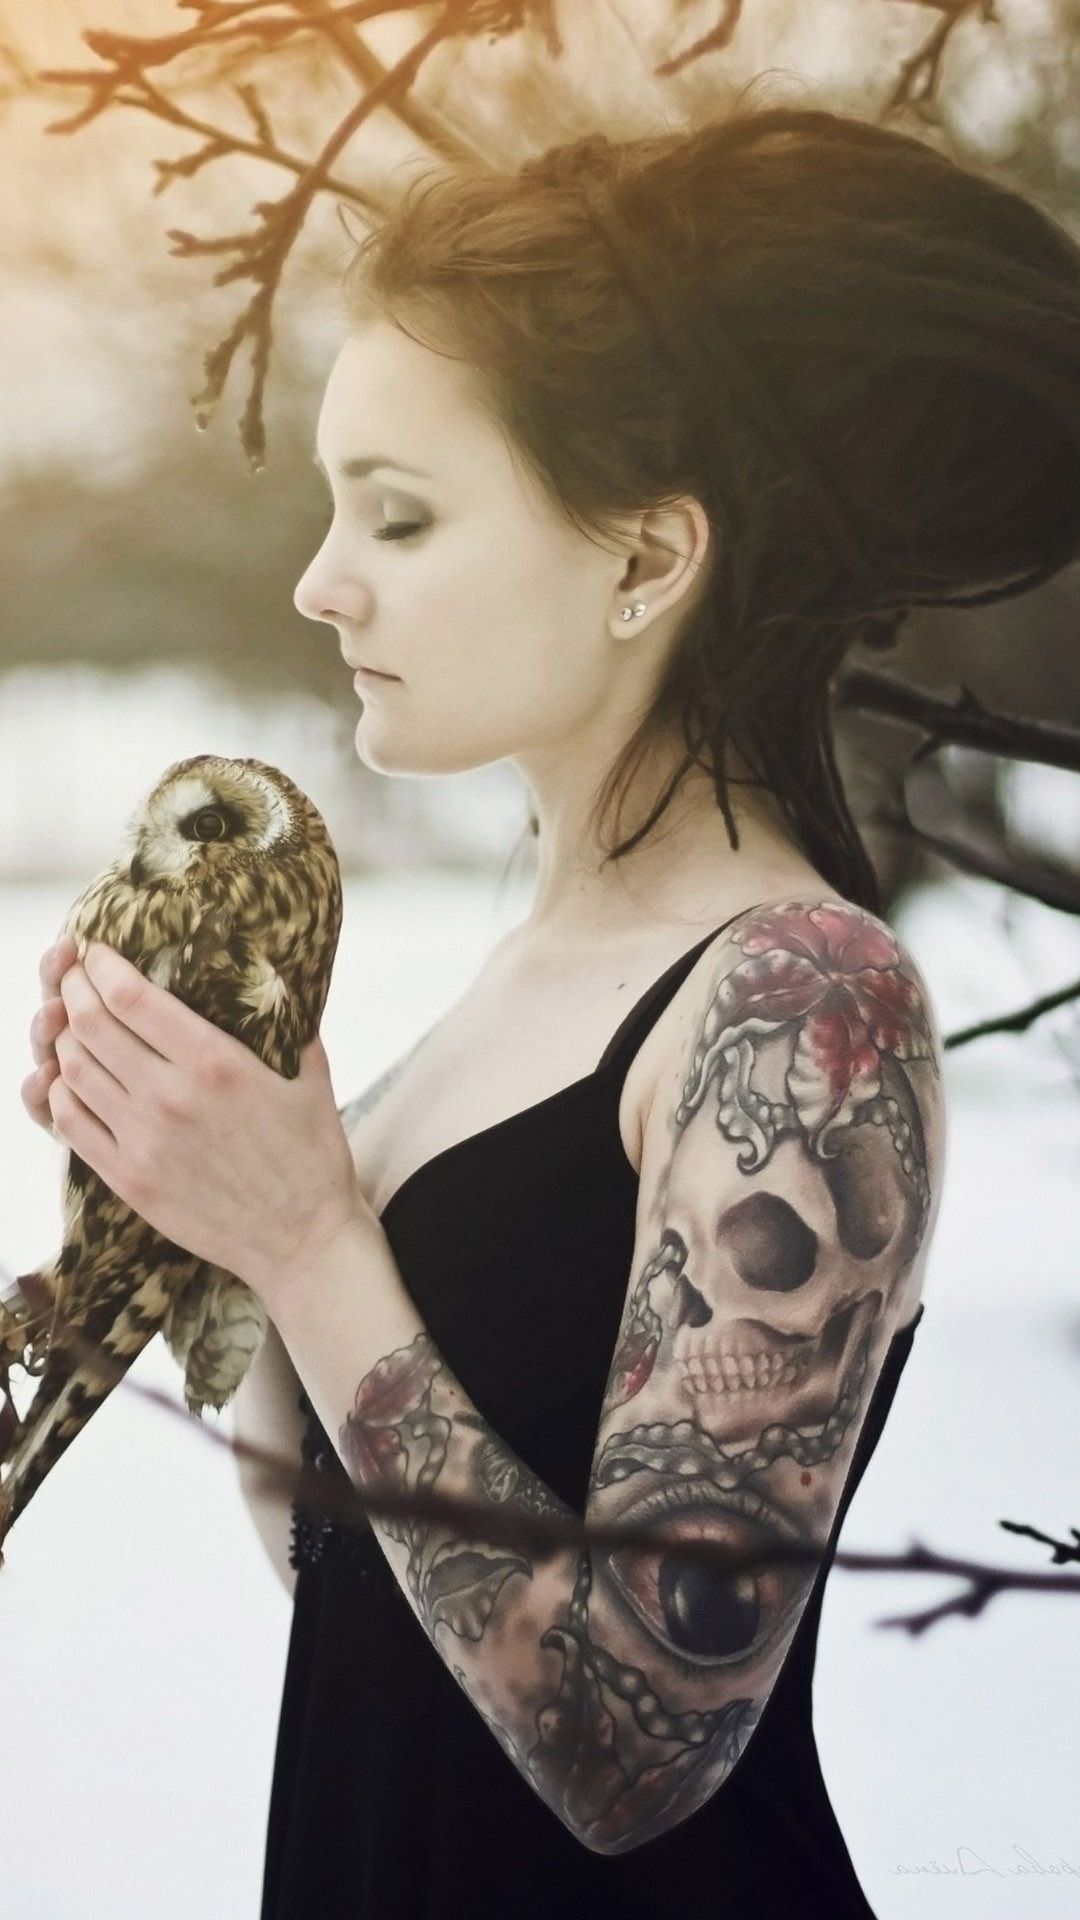 Tattooed rasta girl holding an owl Mobile Wallpaper. Arm tattoos